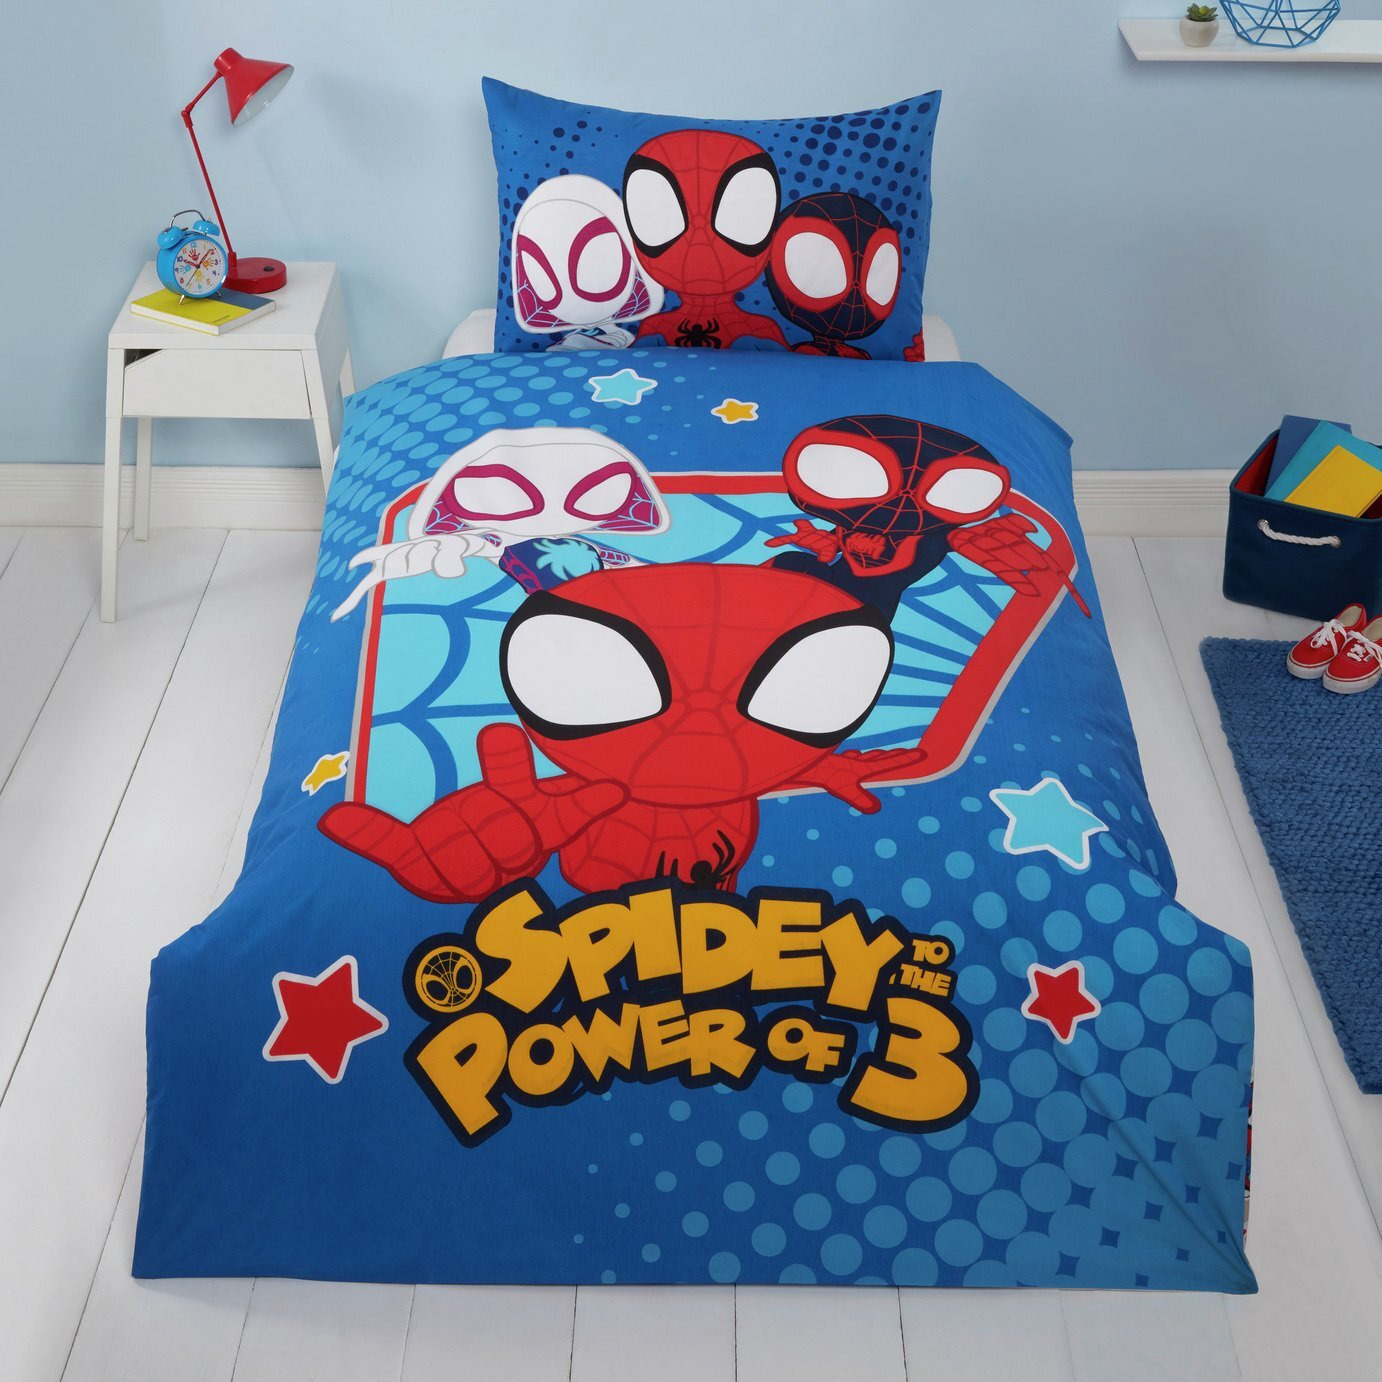 Disney Spidey and Friends Kids Bedding Set - Single - image 1